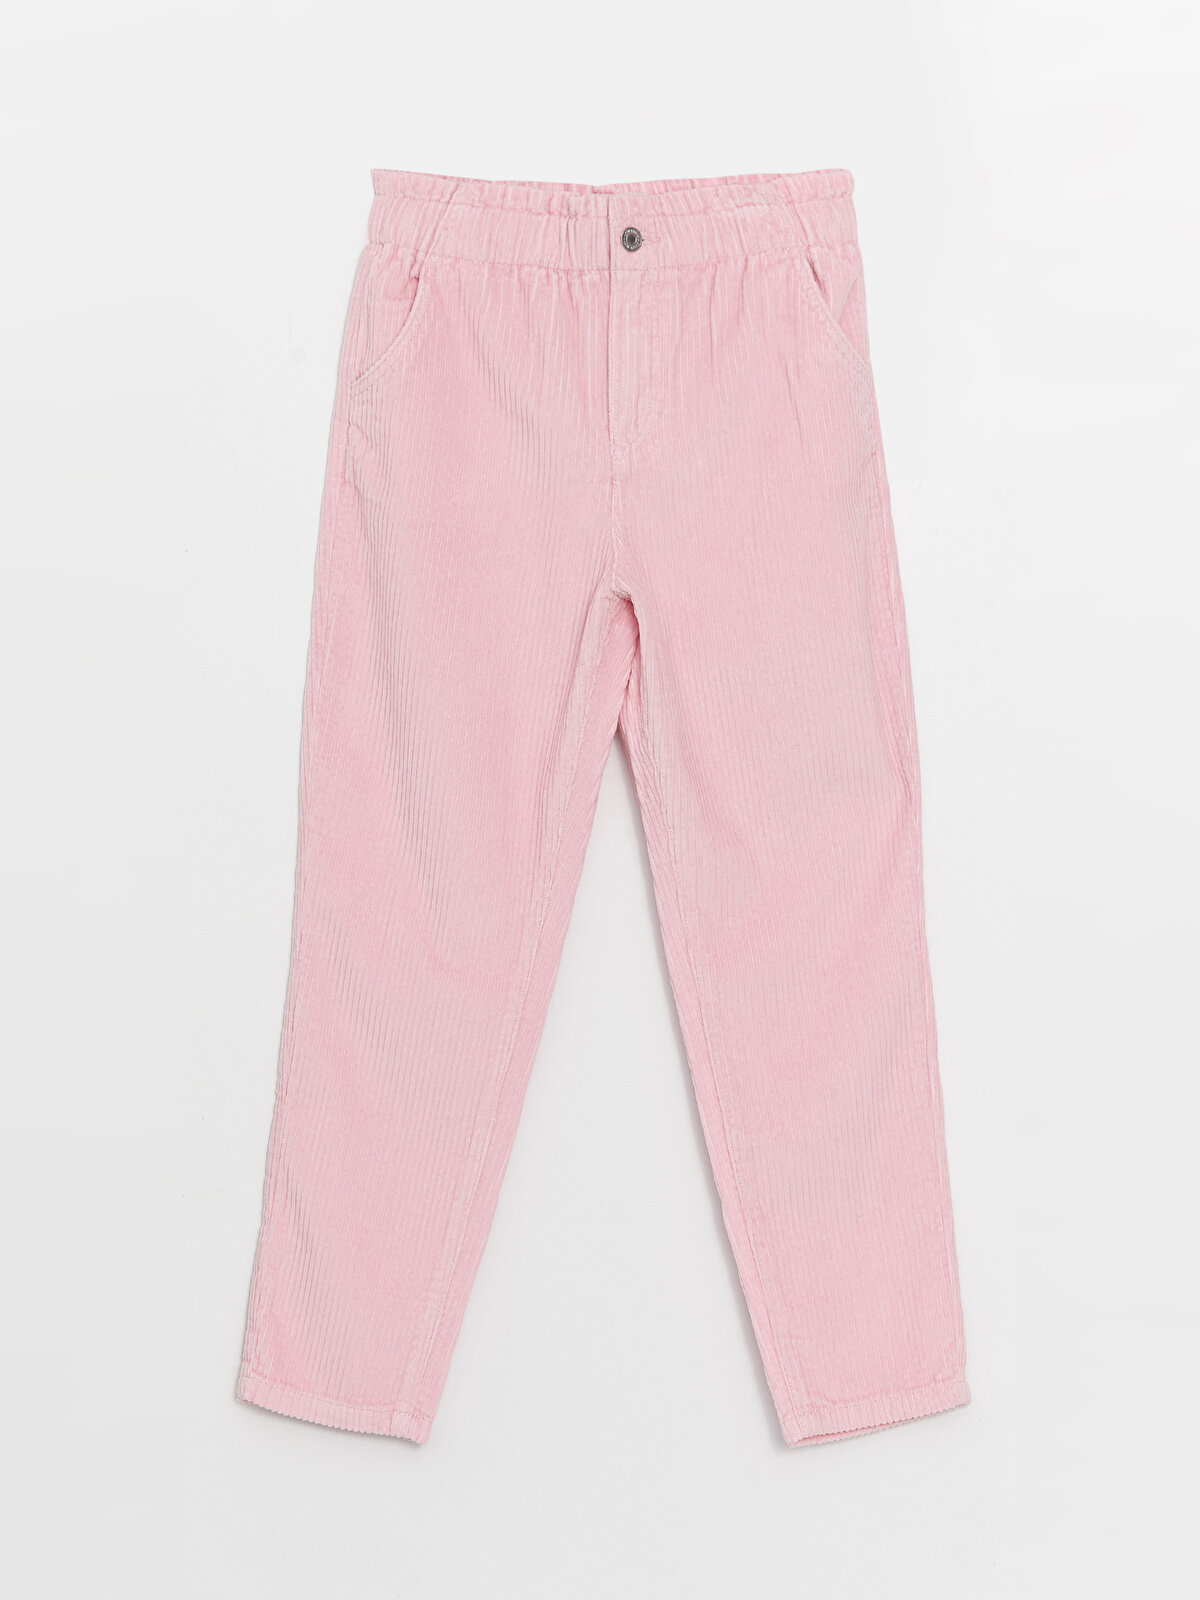 Girls' Joules Pink Trousersleggings